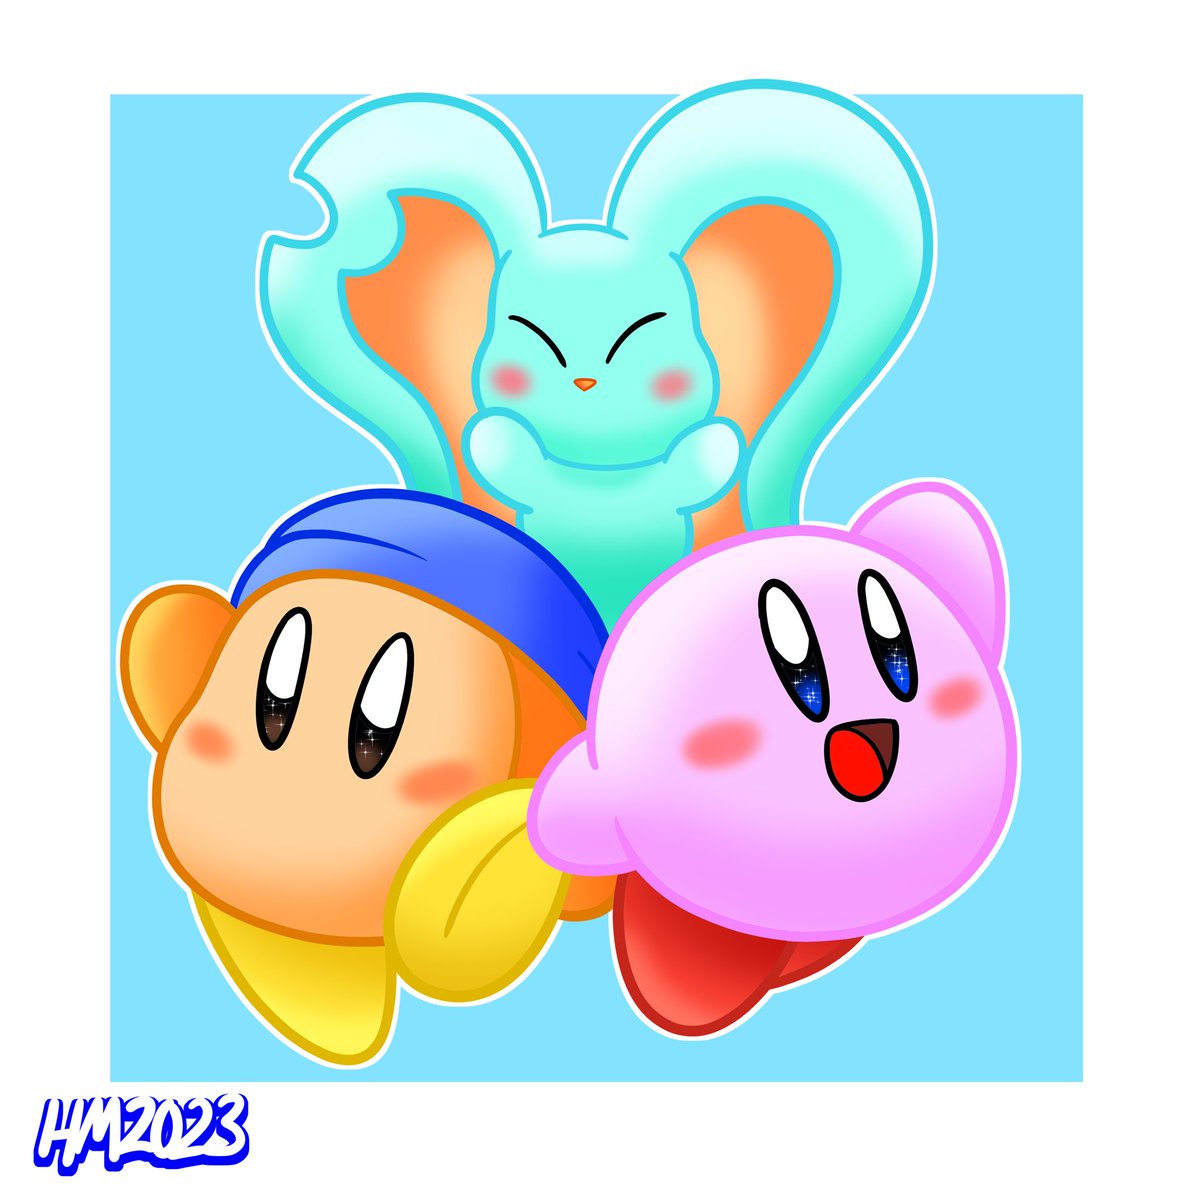 The Heroes of the Forgotten Land!~ 

#Kirby #Nintendo #fanart